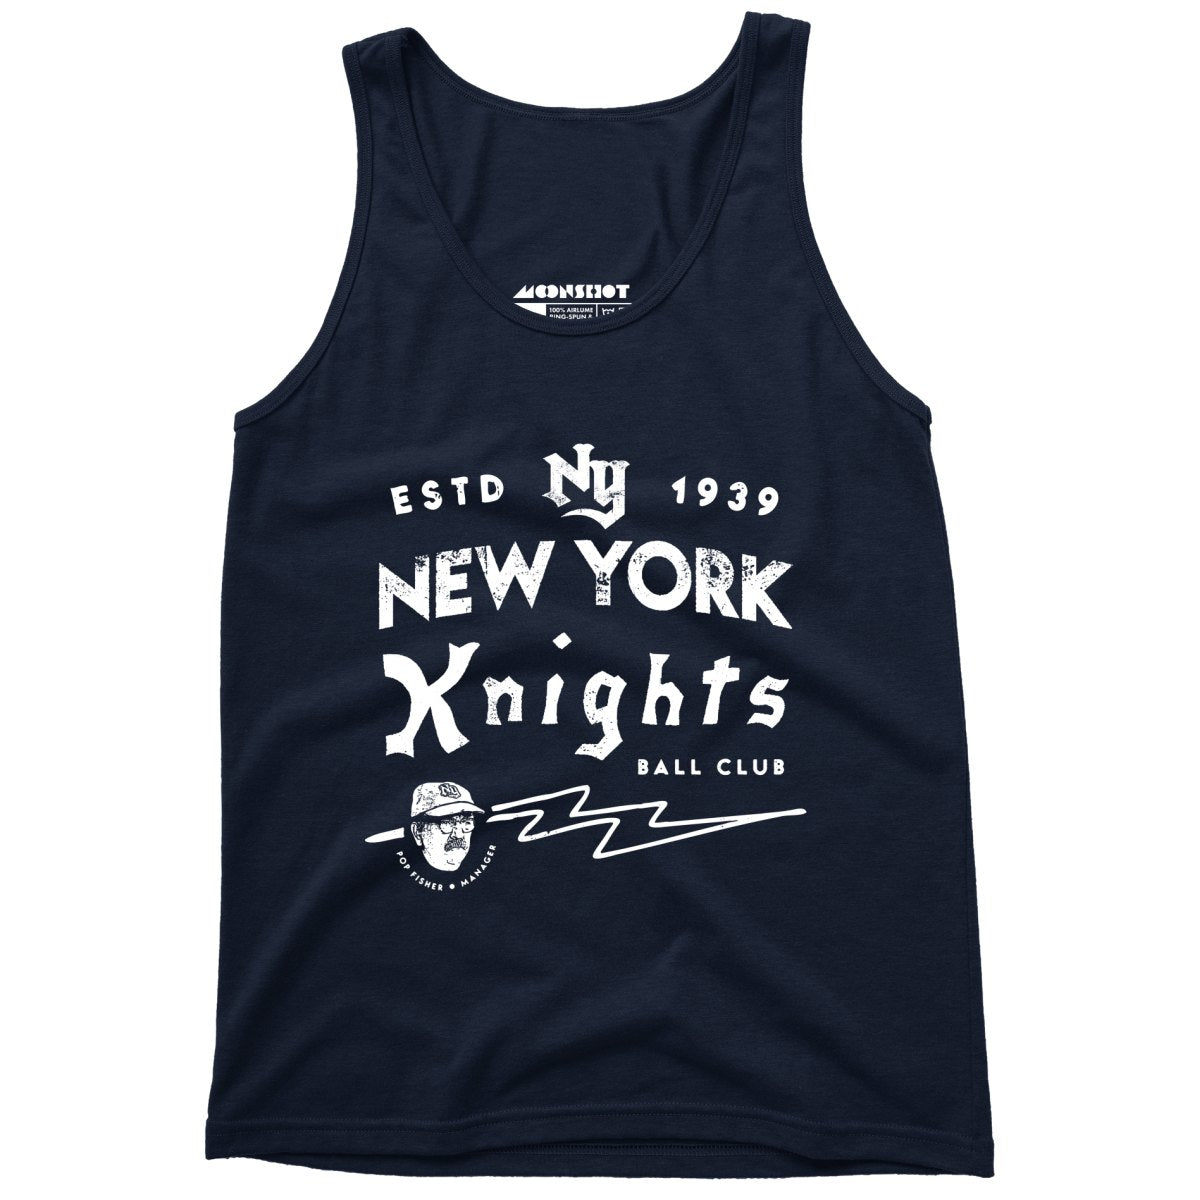 New York Knights Ball Club - Unisex Tank Top